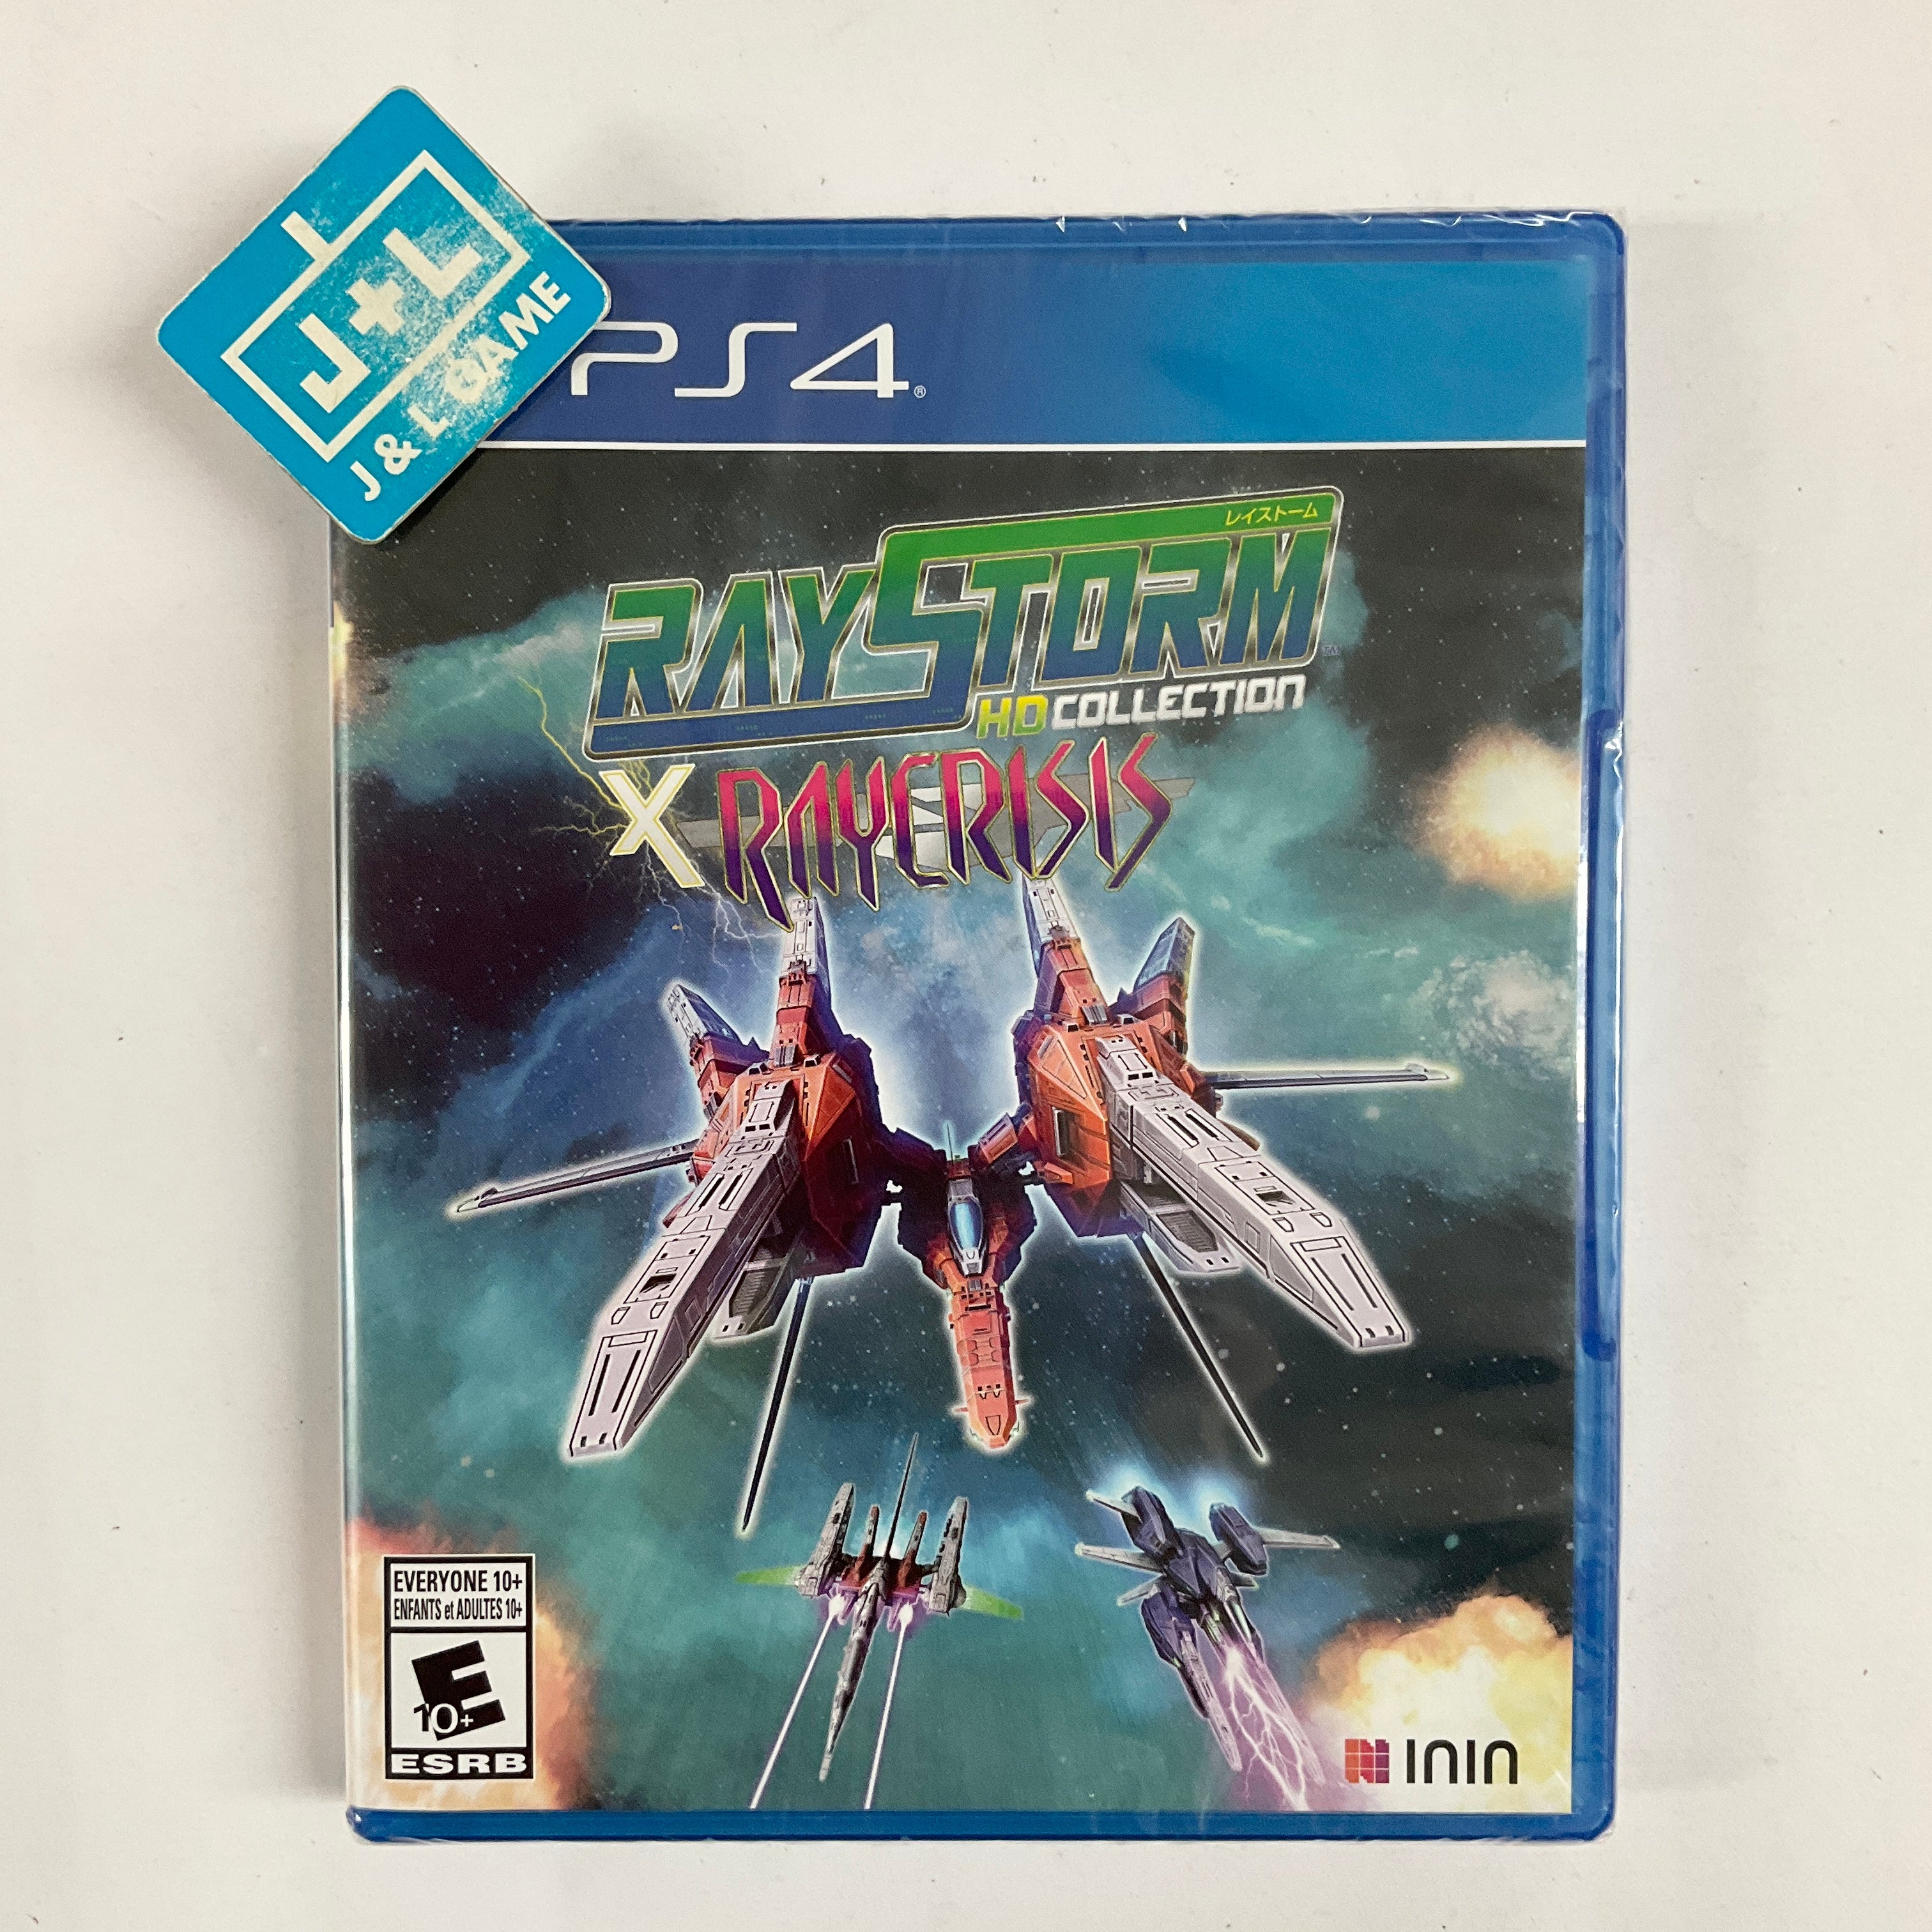 RayStorm X RayCrisis HD Collection - (PS4) PlayStation 4 Video Games ININ   